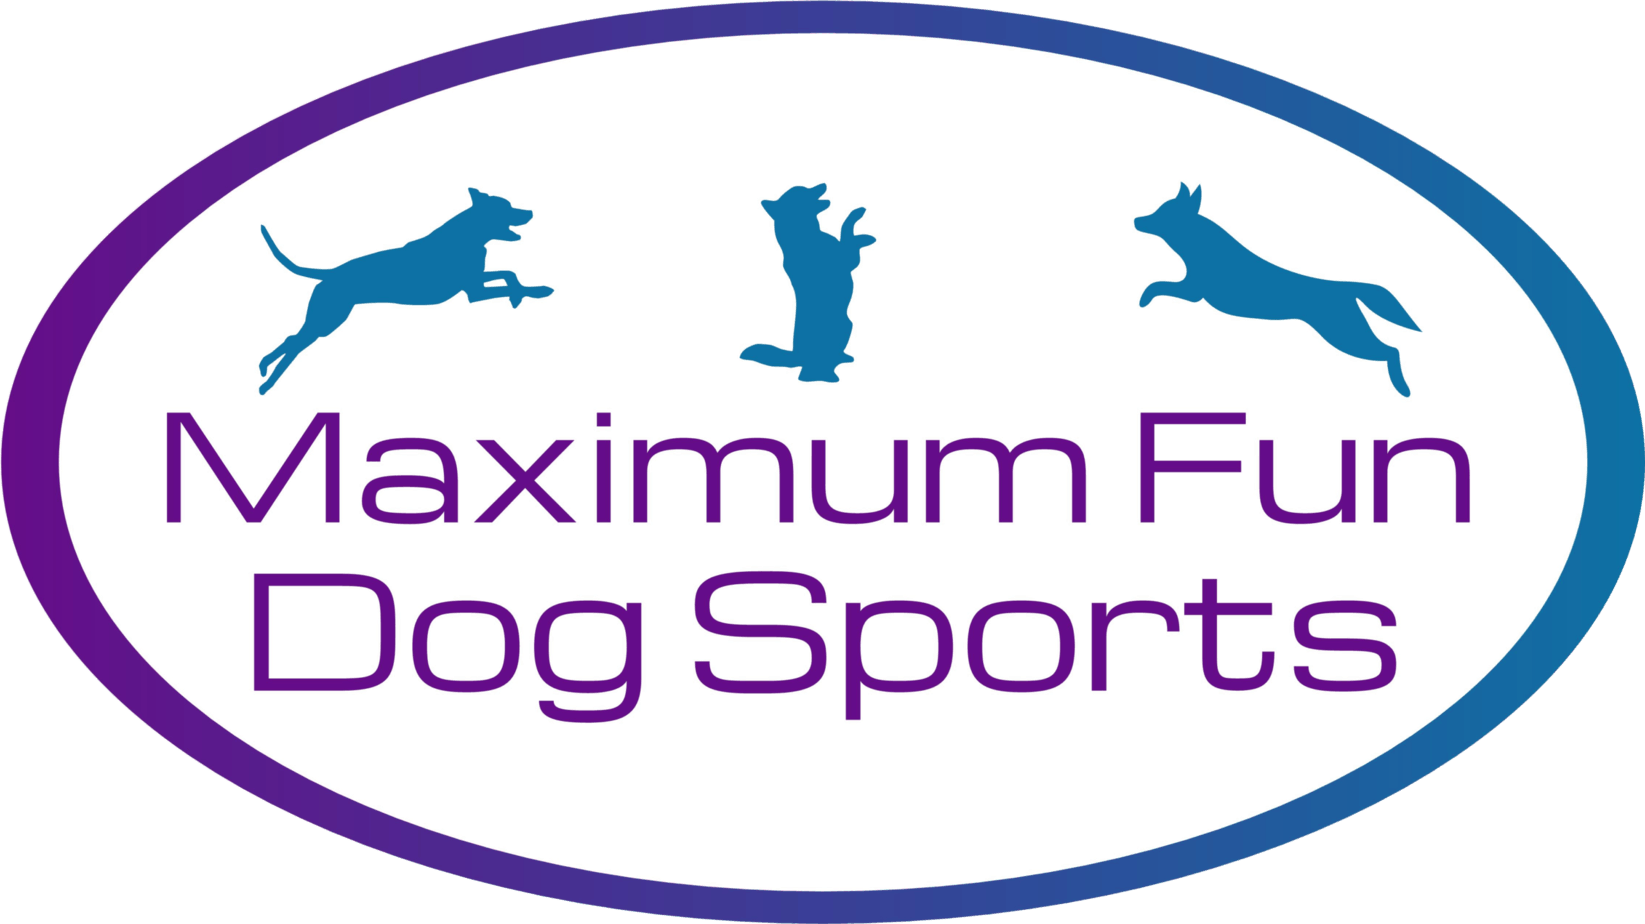 Maximum Fun Dog Sports